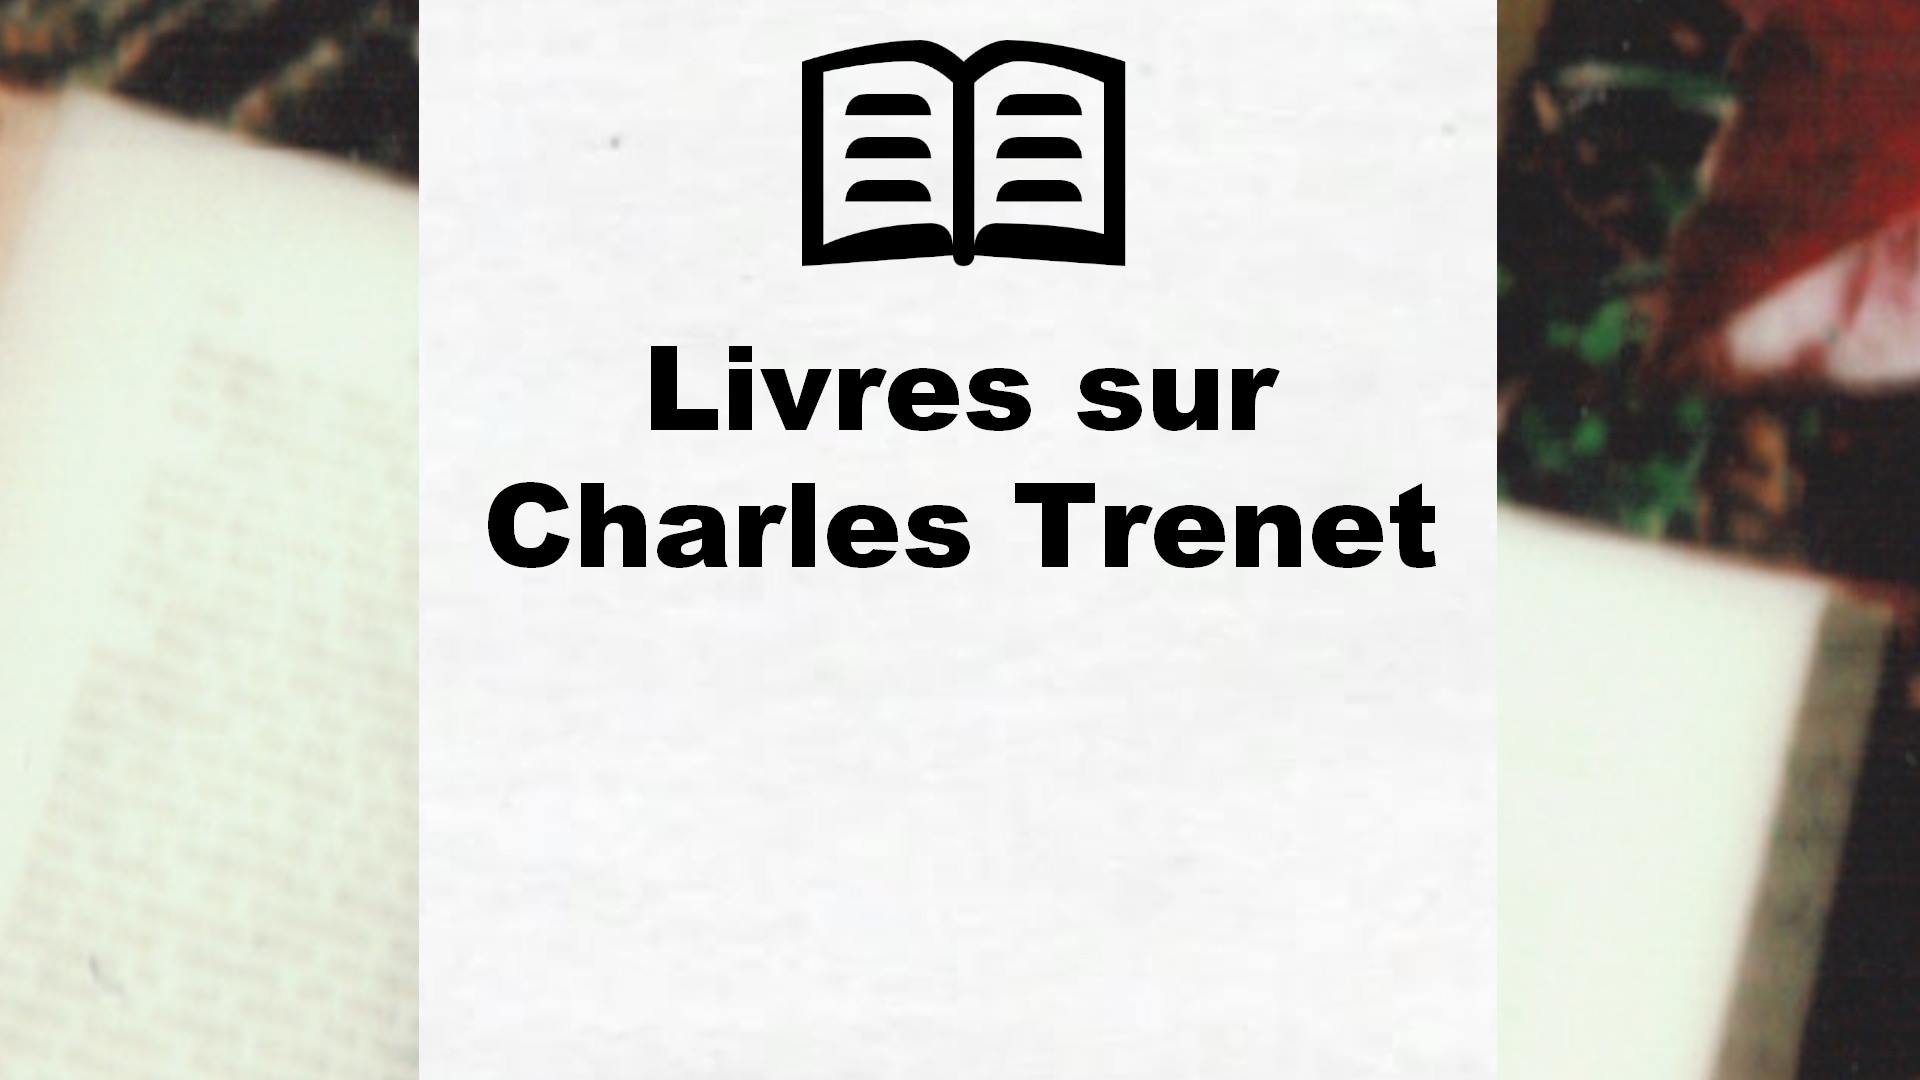 Livres sur Charles Trenet